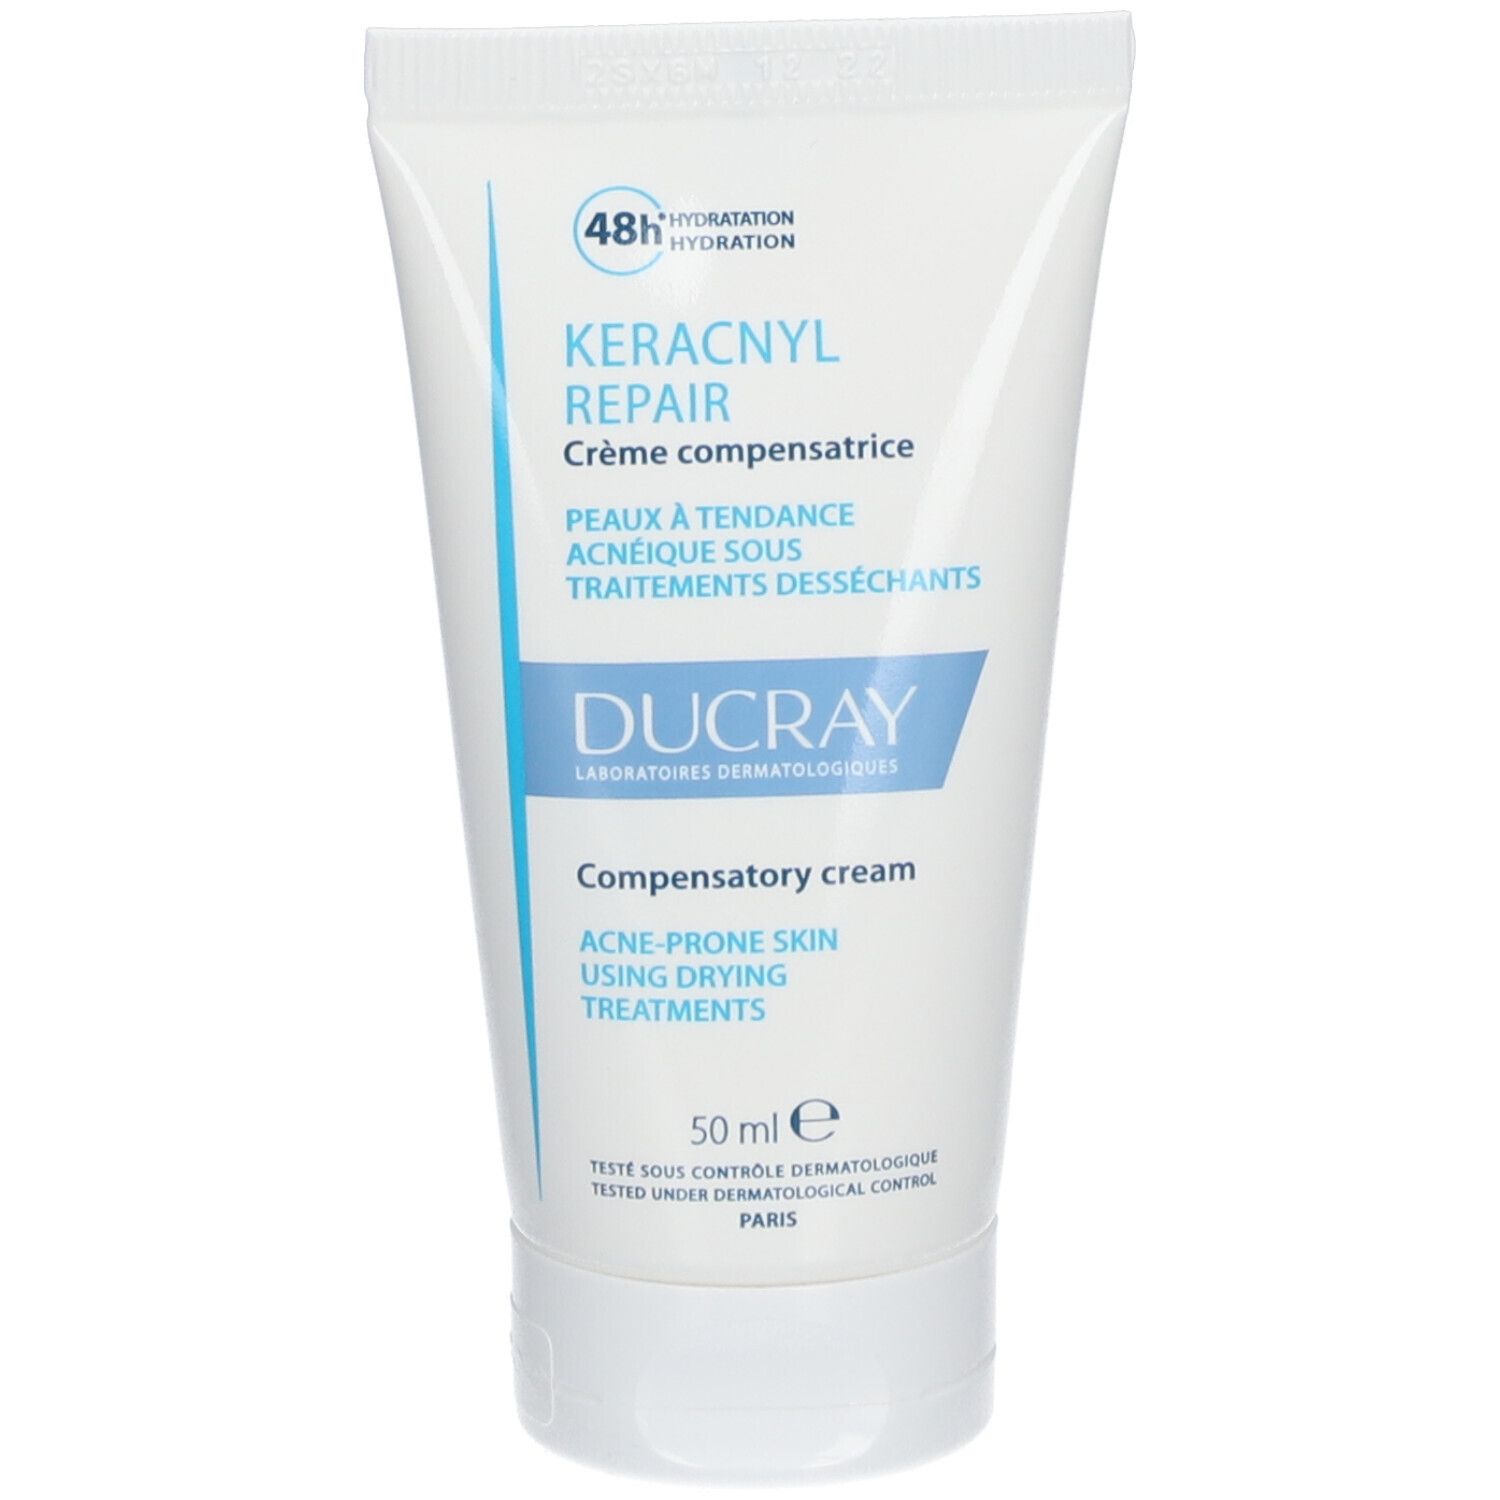 Ducray Keracnyl Repair Crème compensatrice